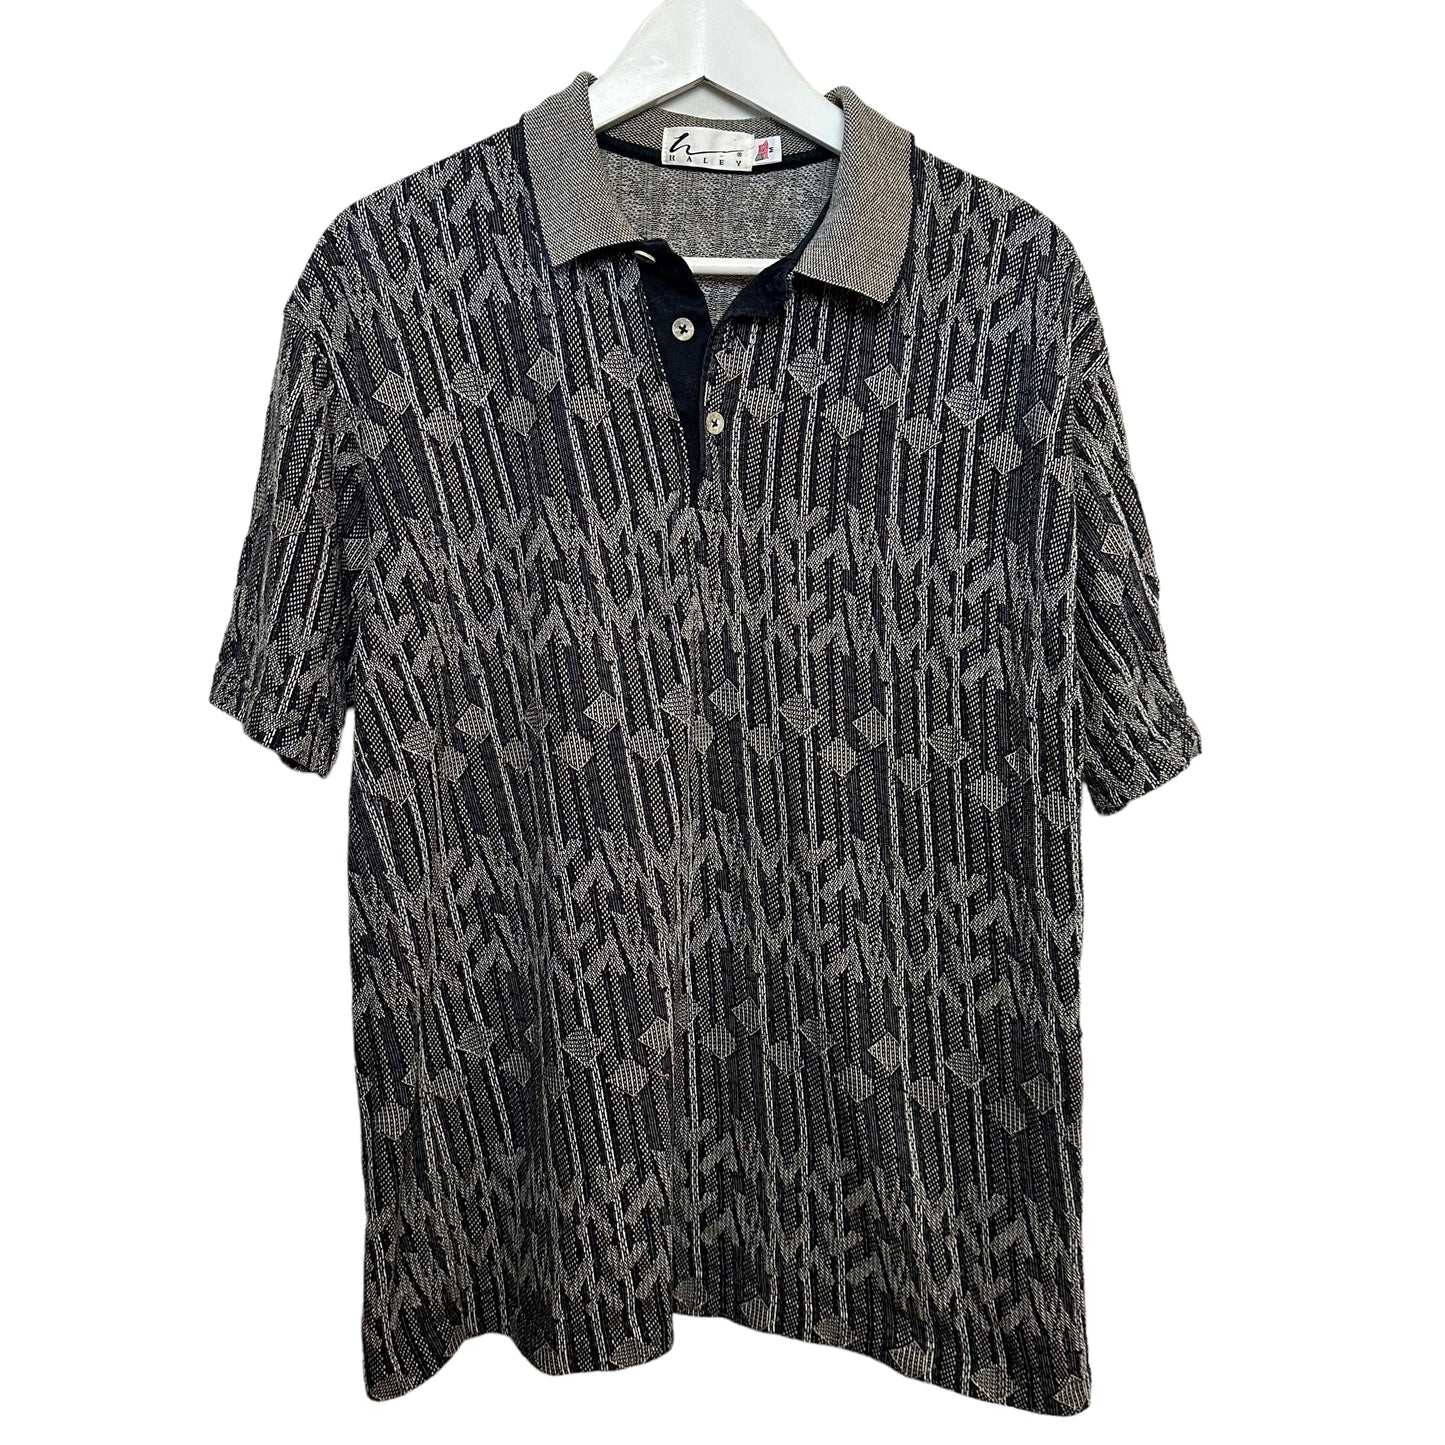 Vintage 90s Haley Polo Shirt Golf Geometric Patterned Black Collared Medium